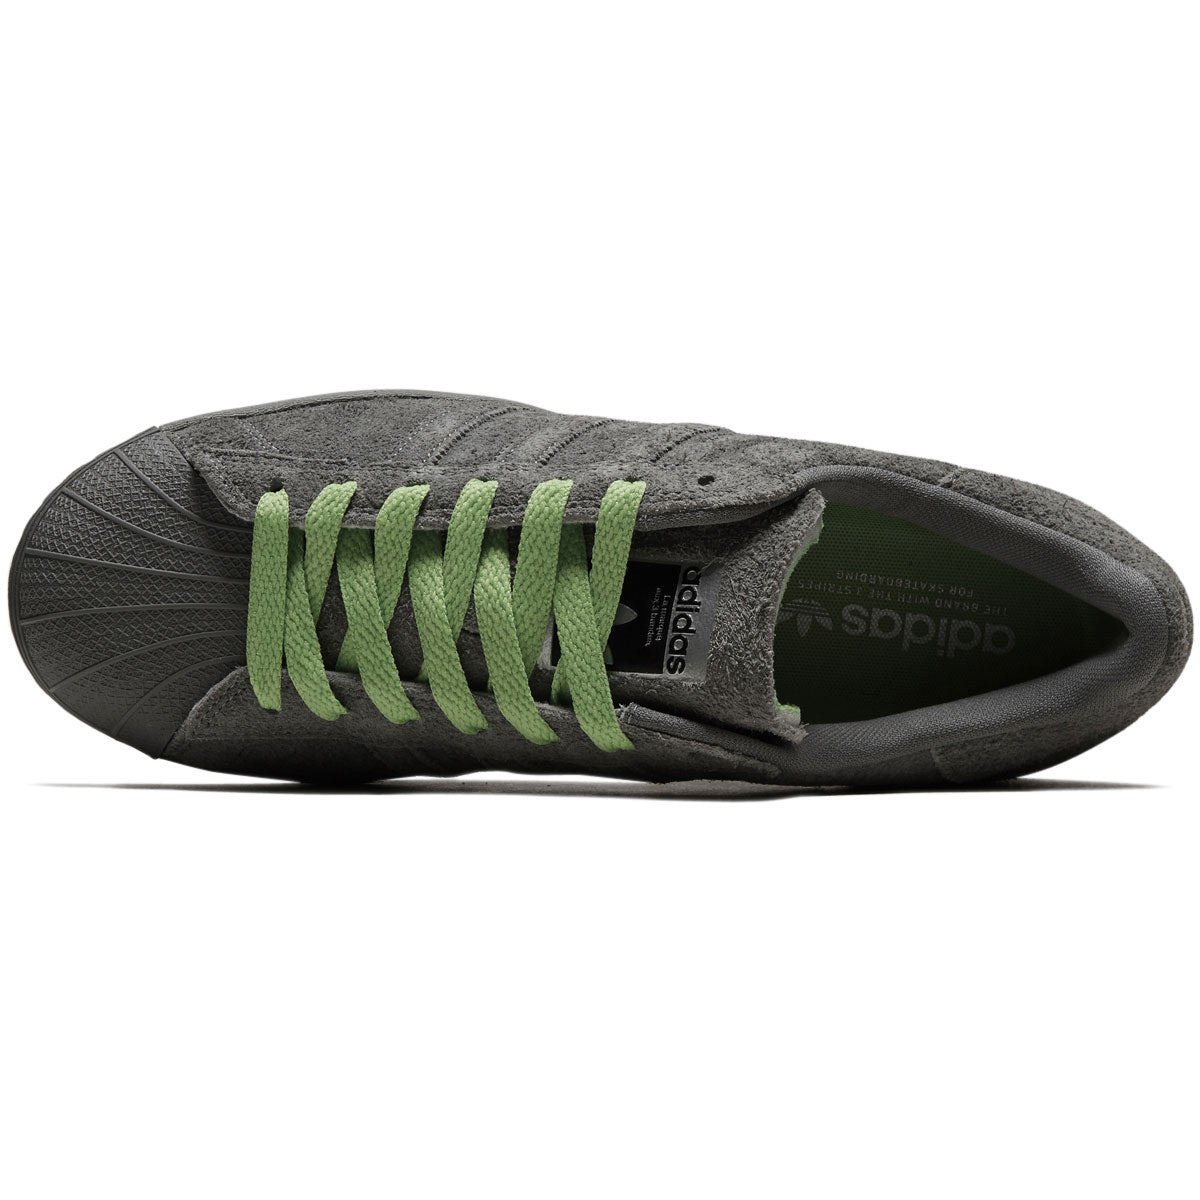 Adidas Superstar ADV Shoes - Grey/Grey/Core Black image 3